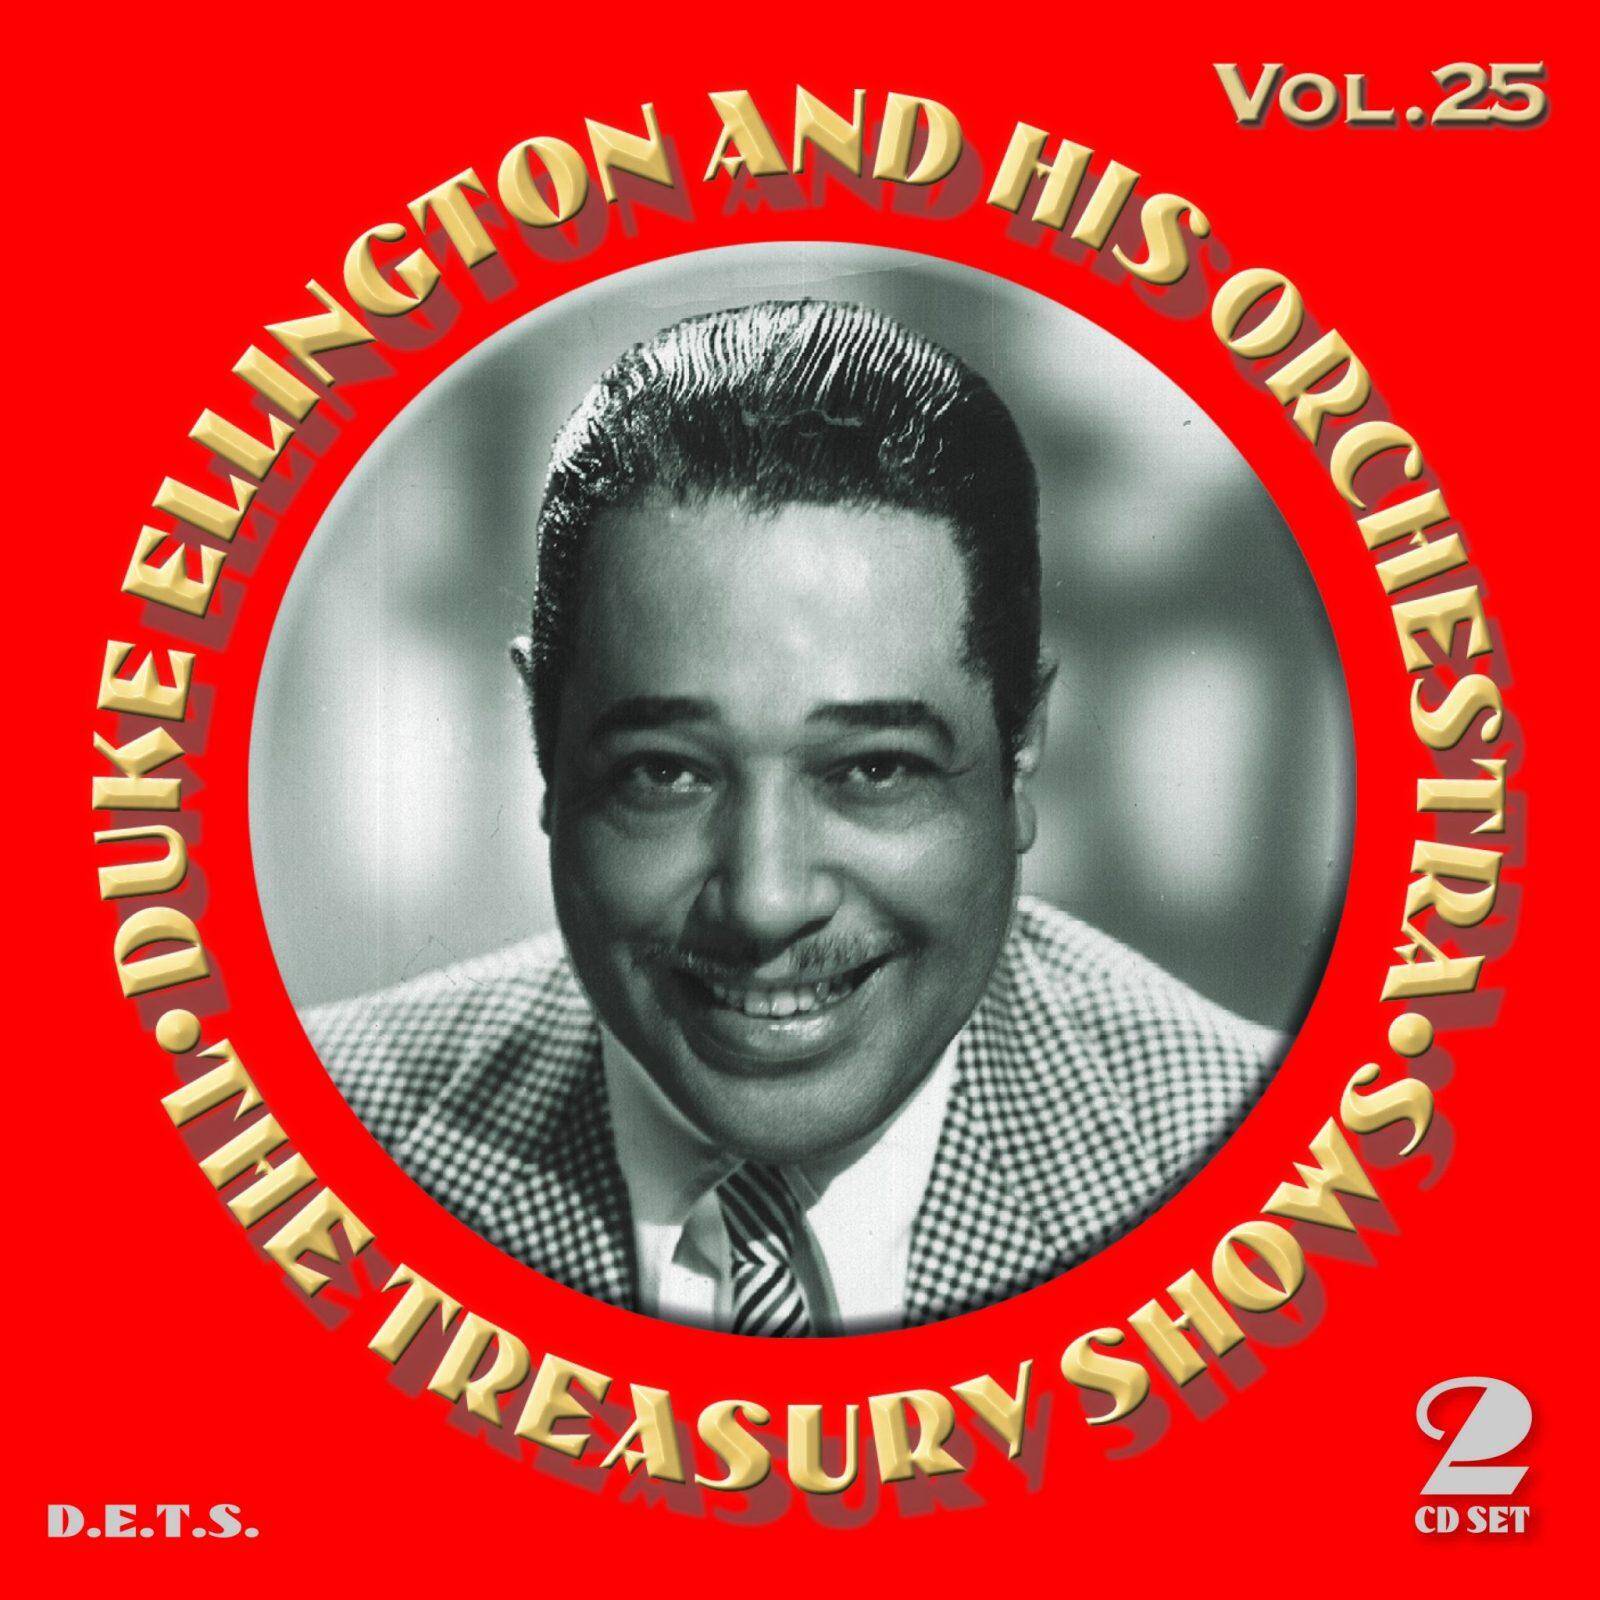 Duke Ellington's Treasury Shows Vol. 25